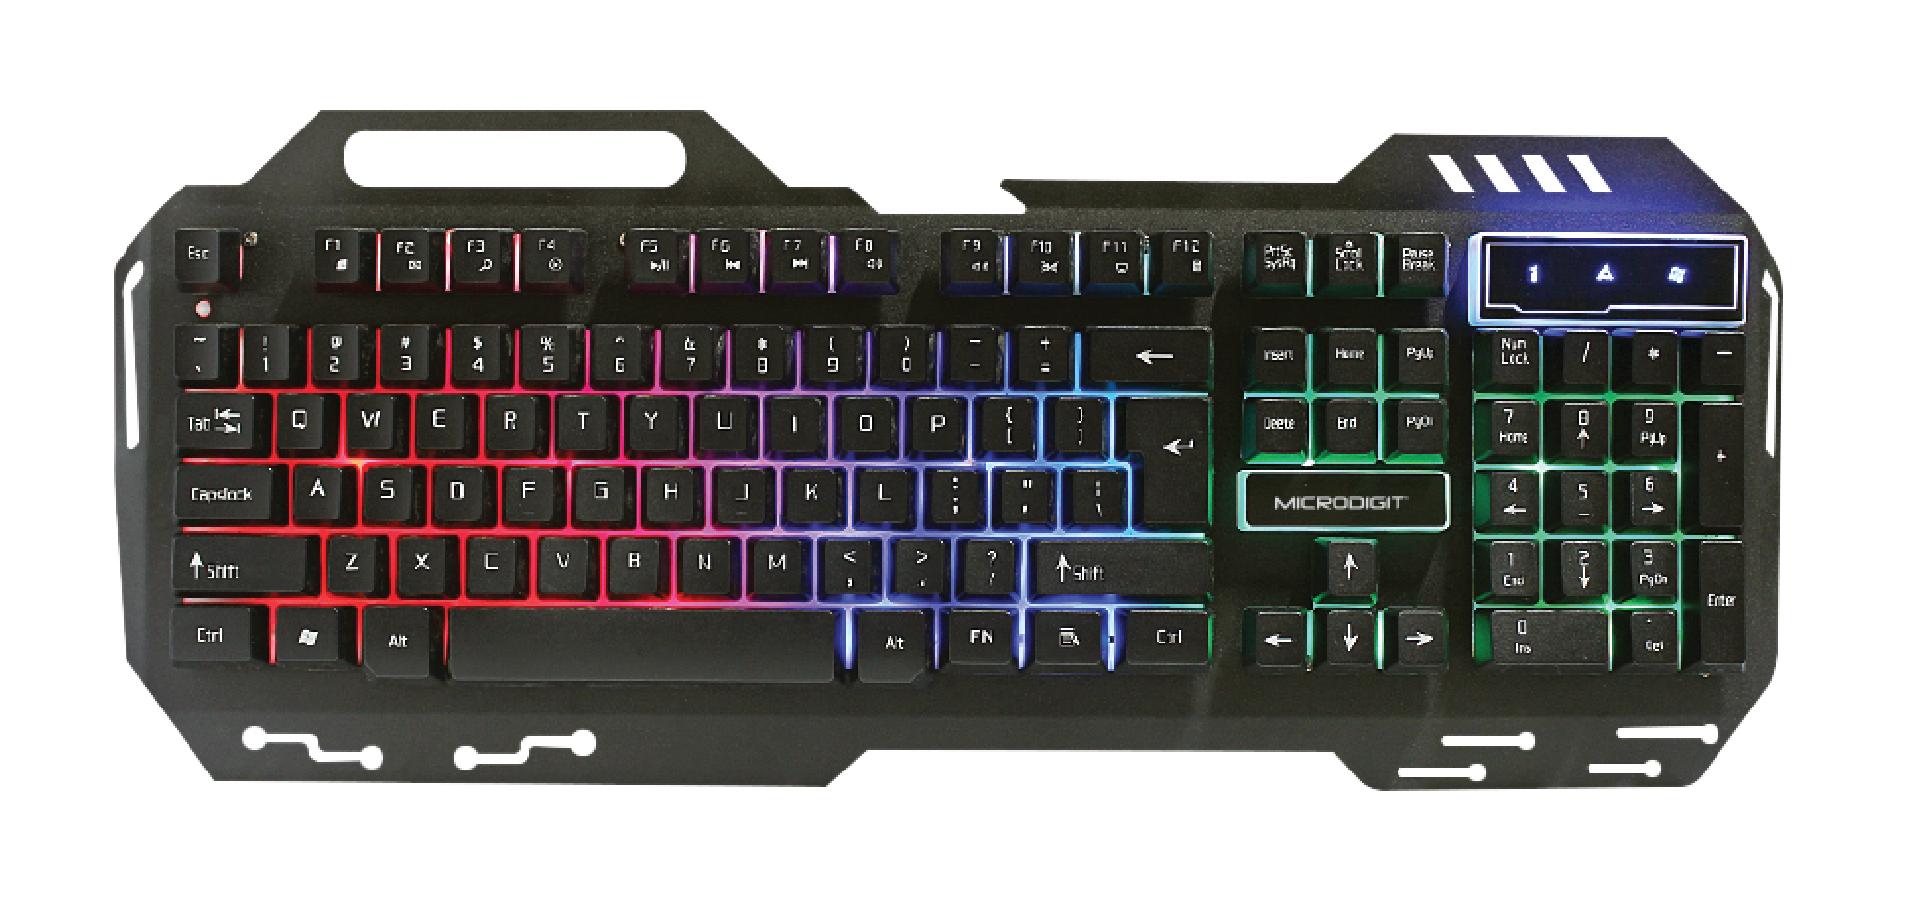 Microdigit Raider Waterproof Keyboard Combo - MD1001GK